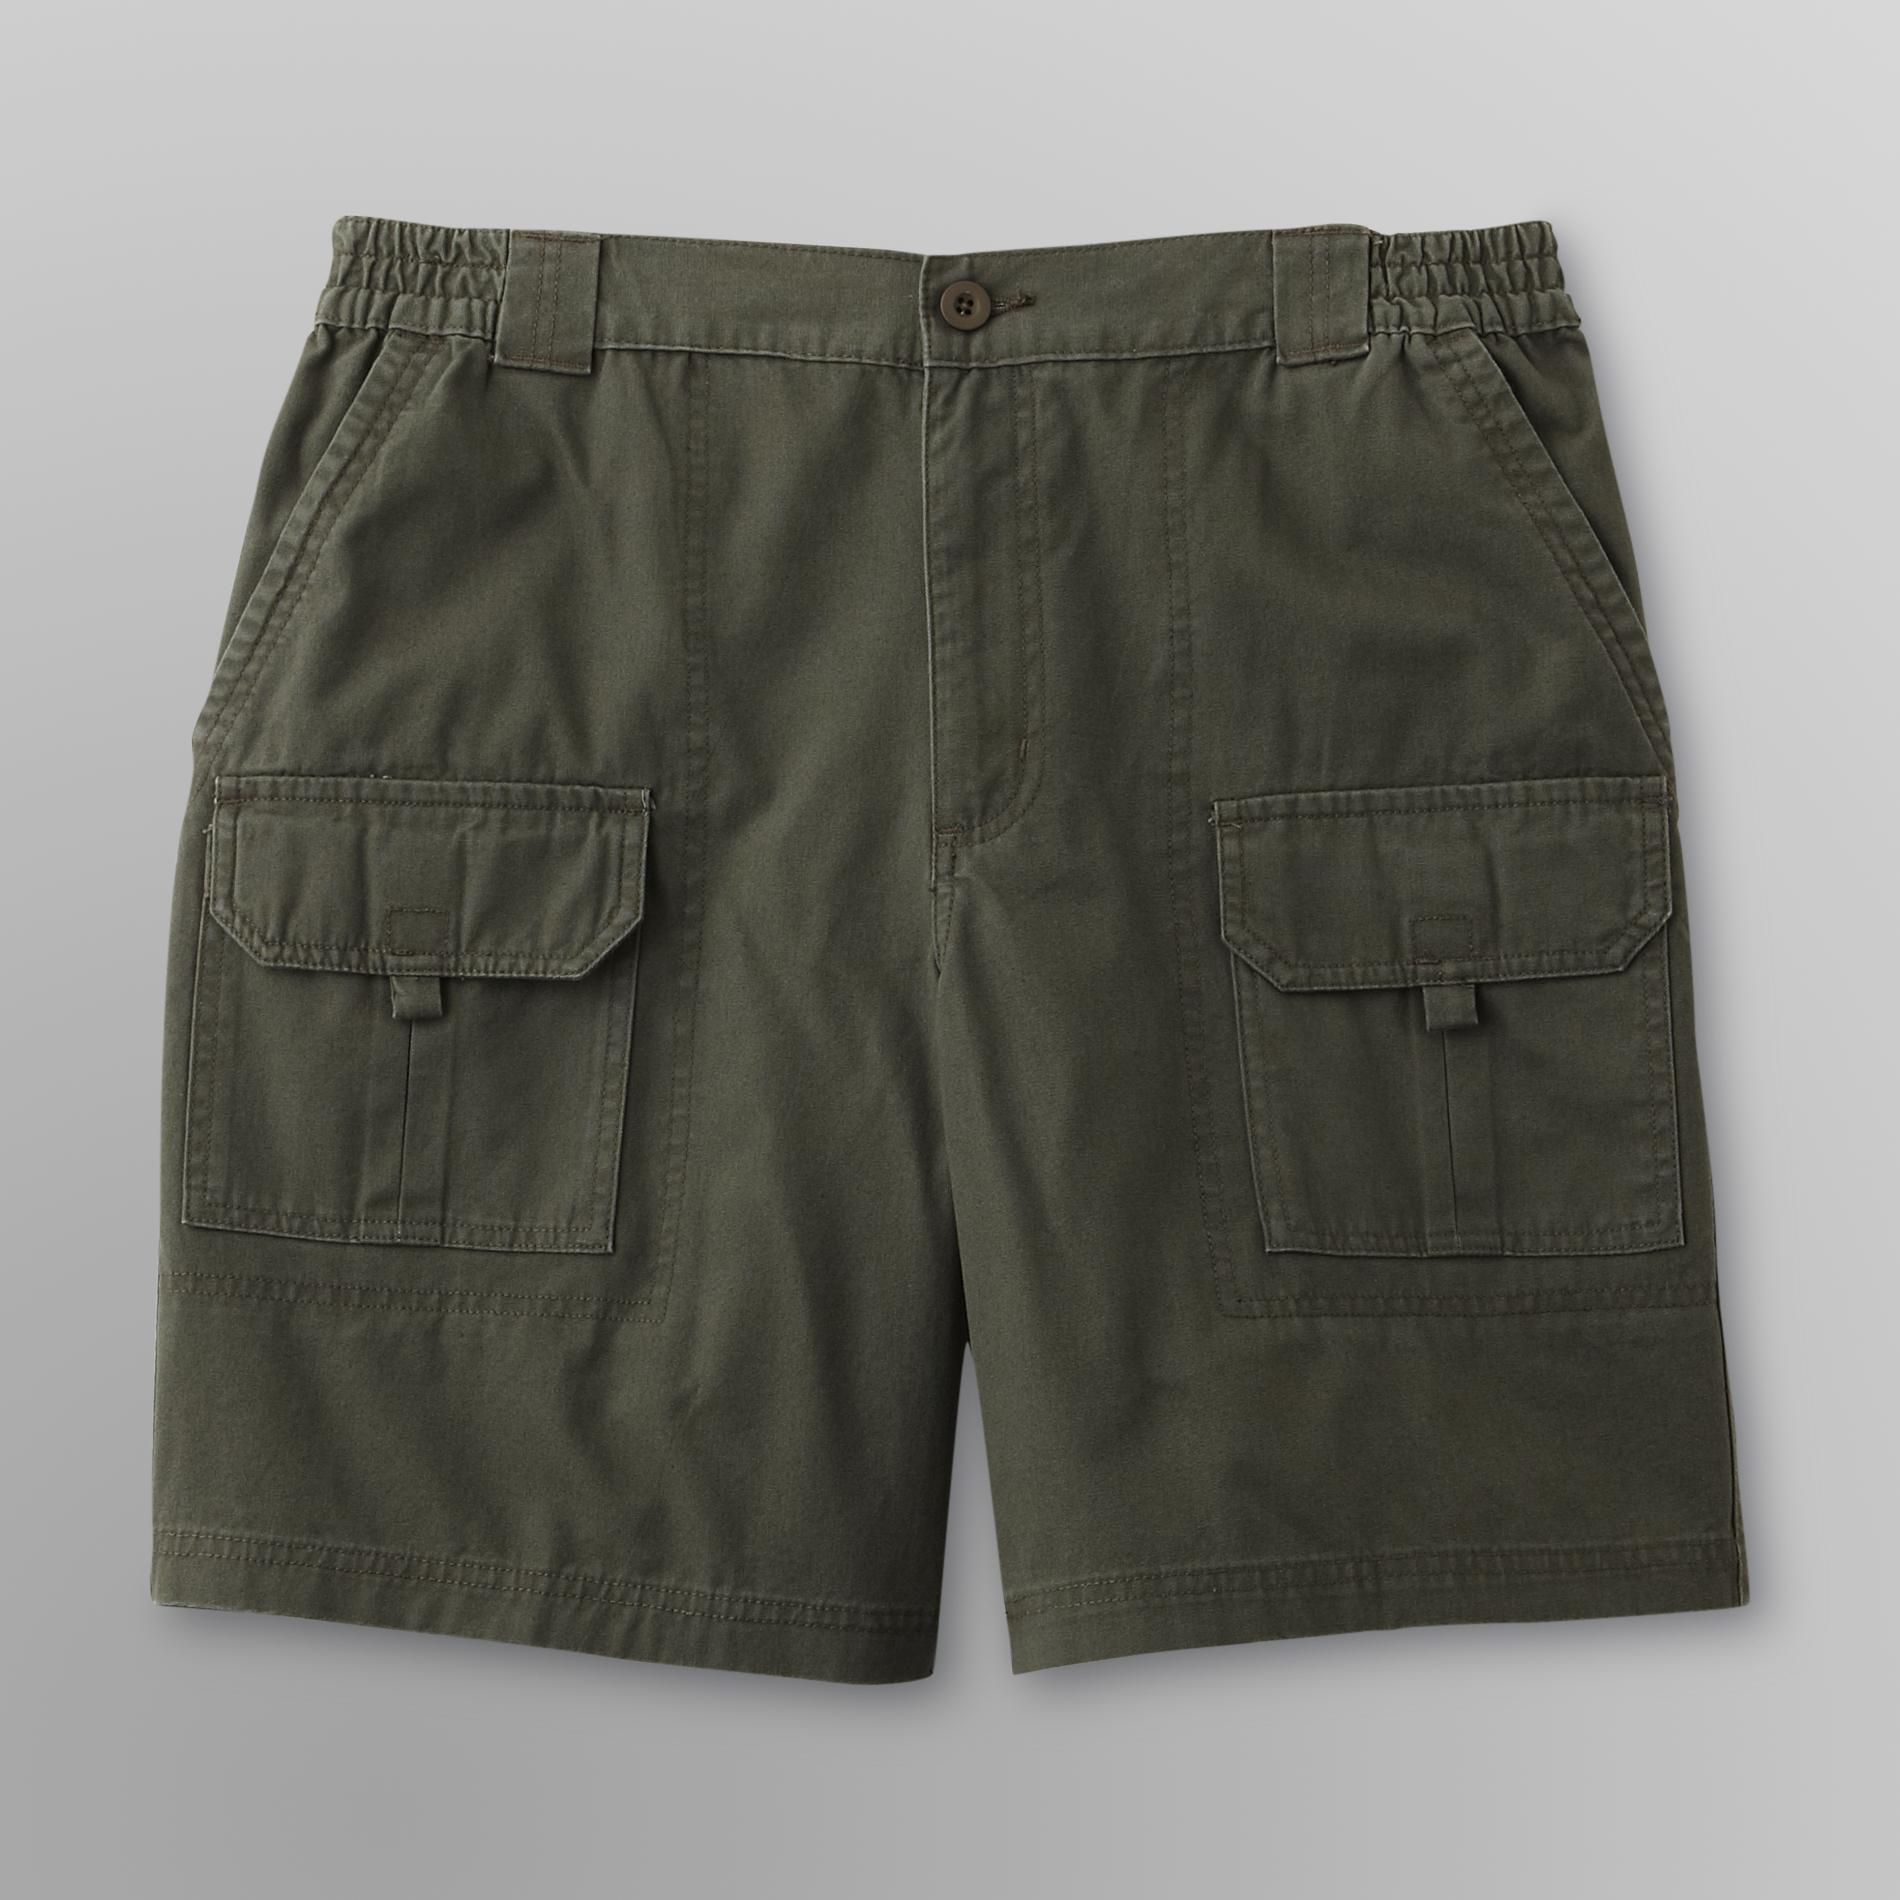 Basic Editions Men's Cargo Shorts